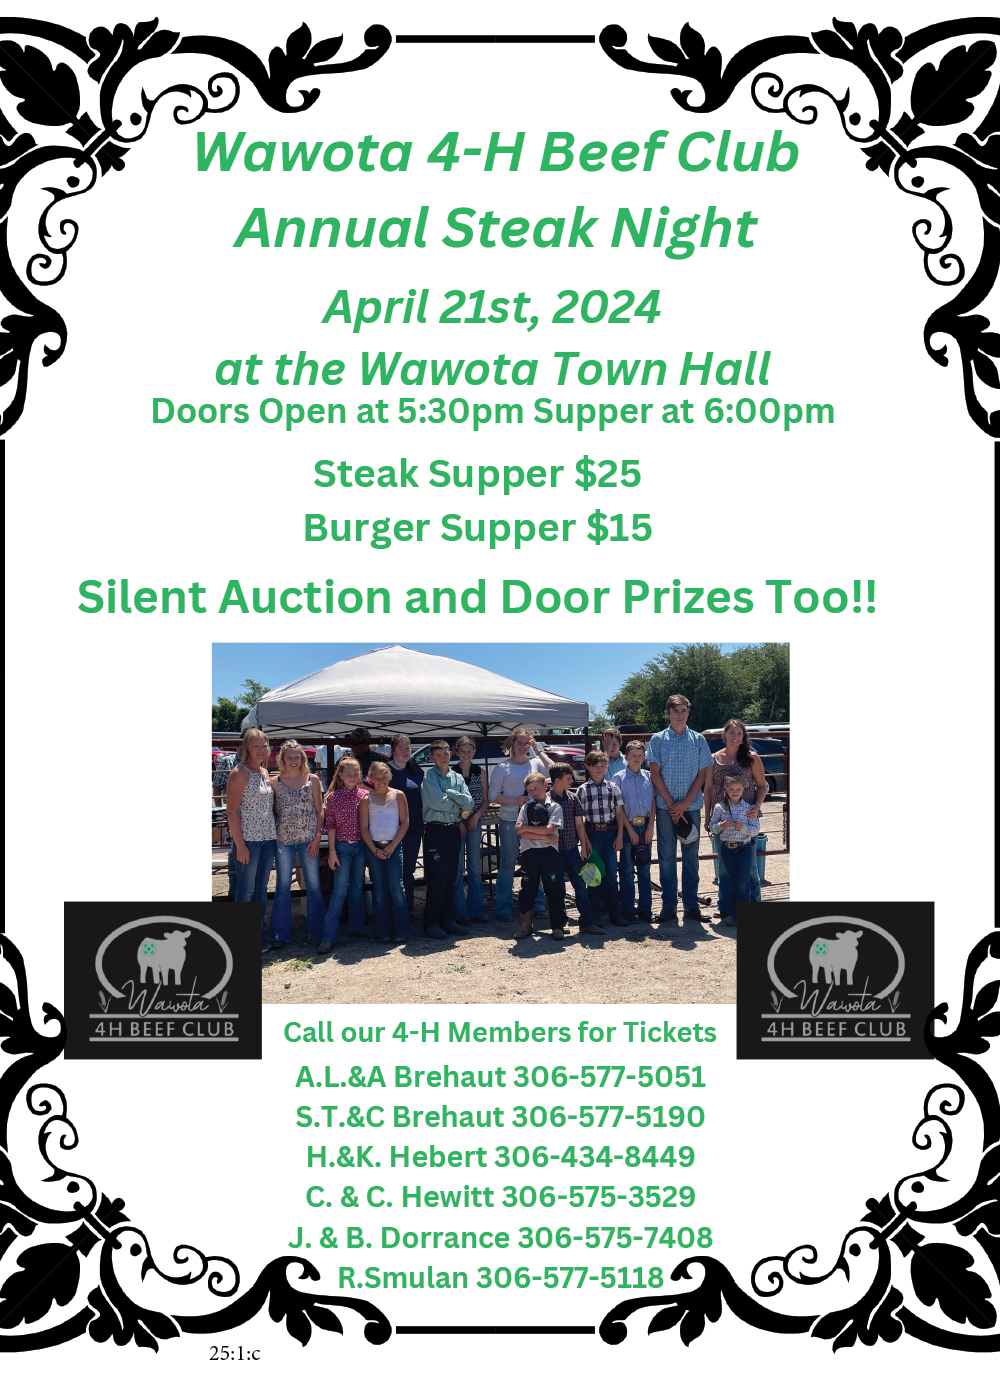 Wawota 4-H Beef Club Annual steak night